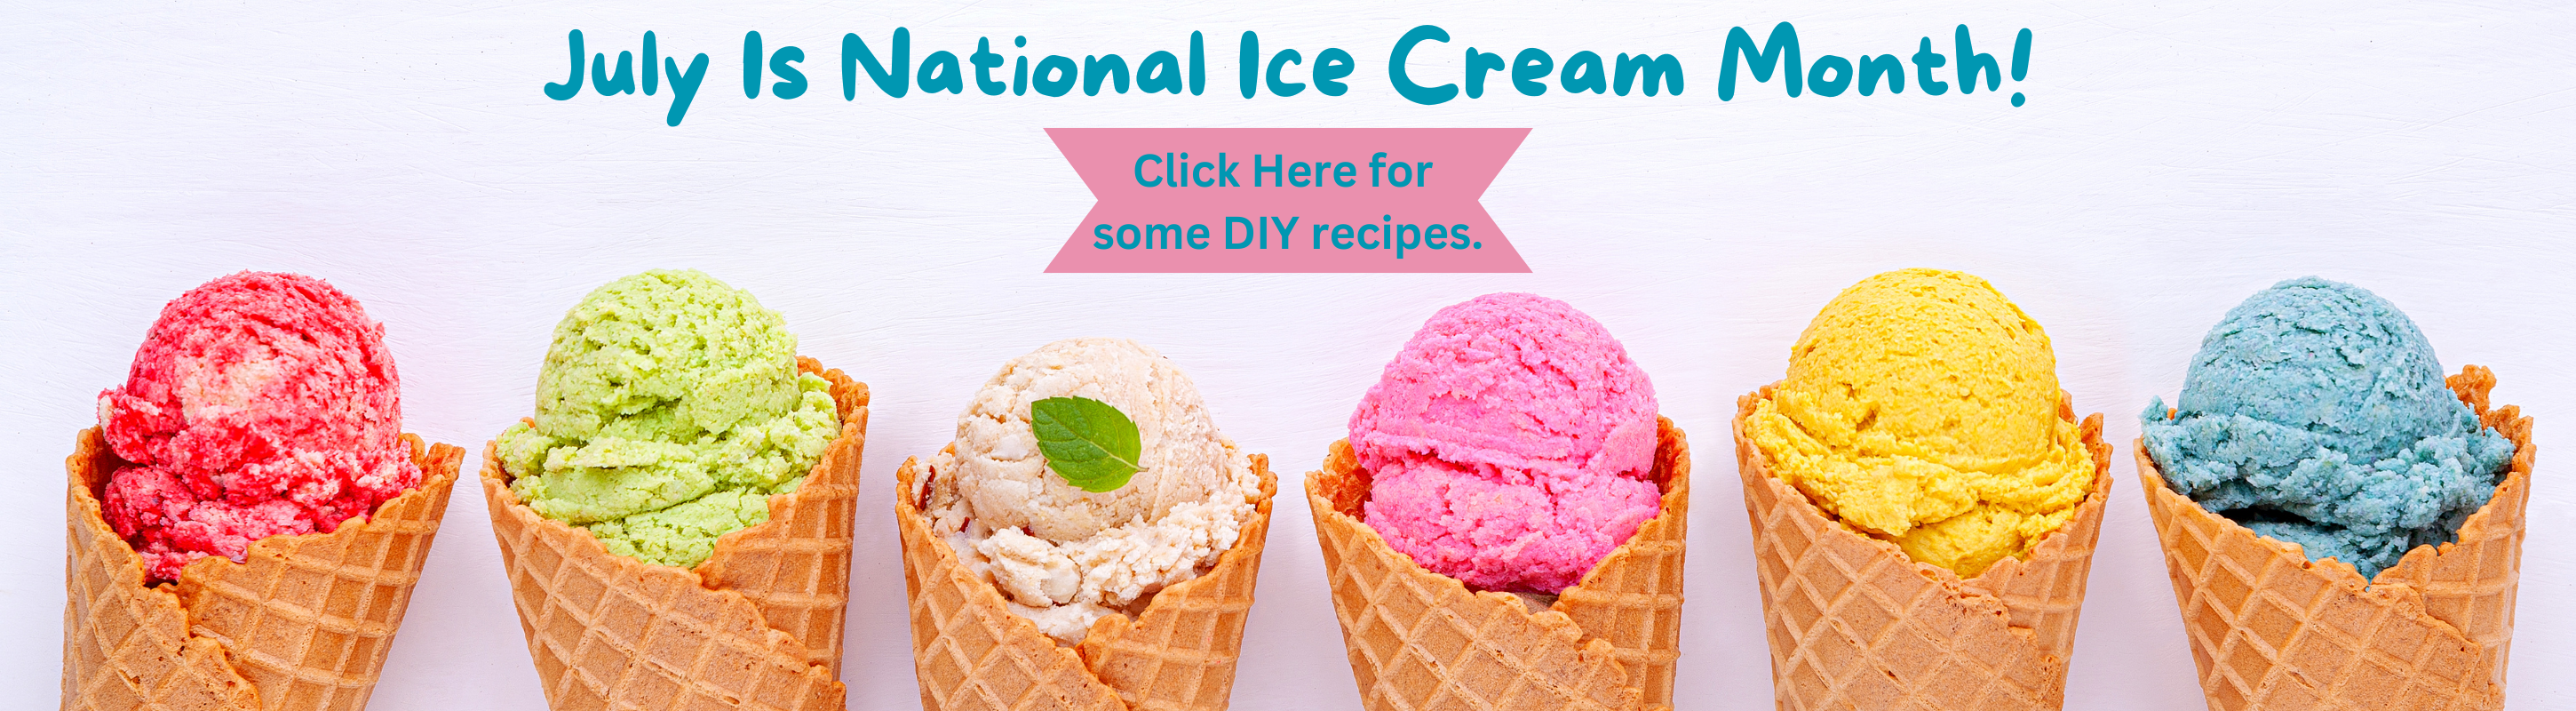 National Ice Cream Month!